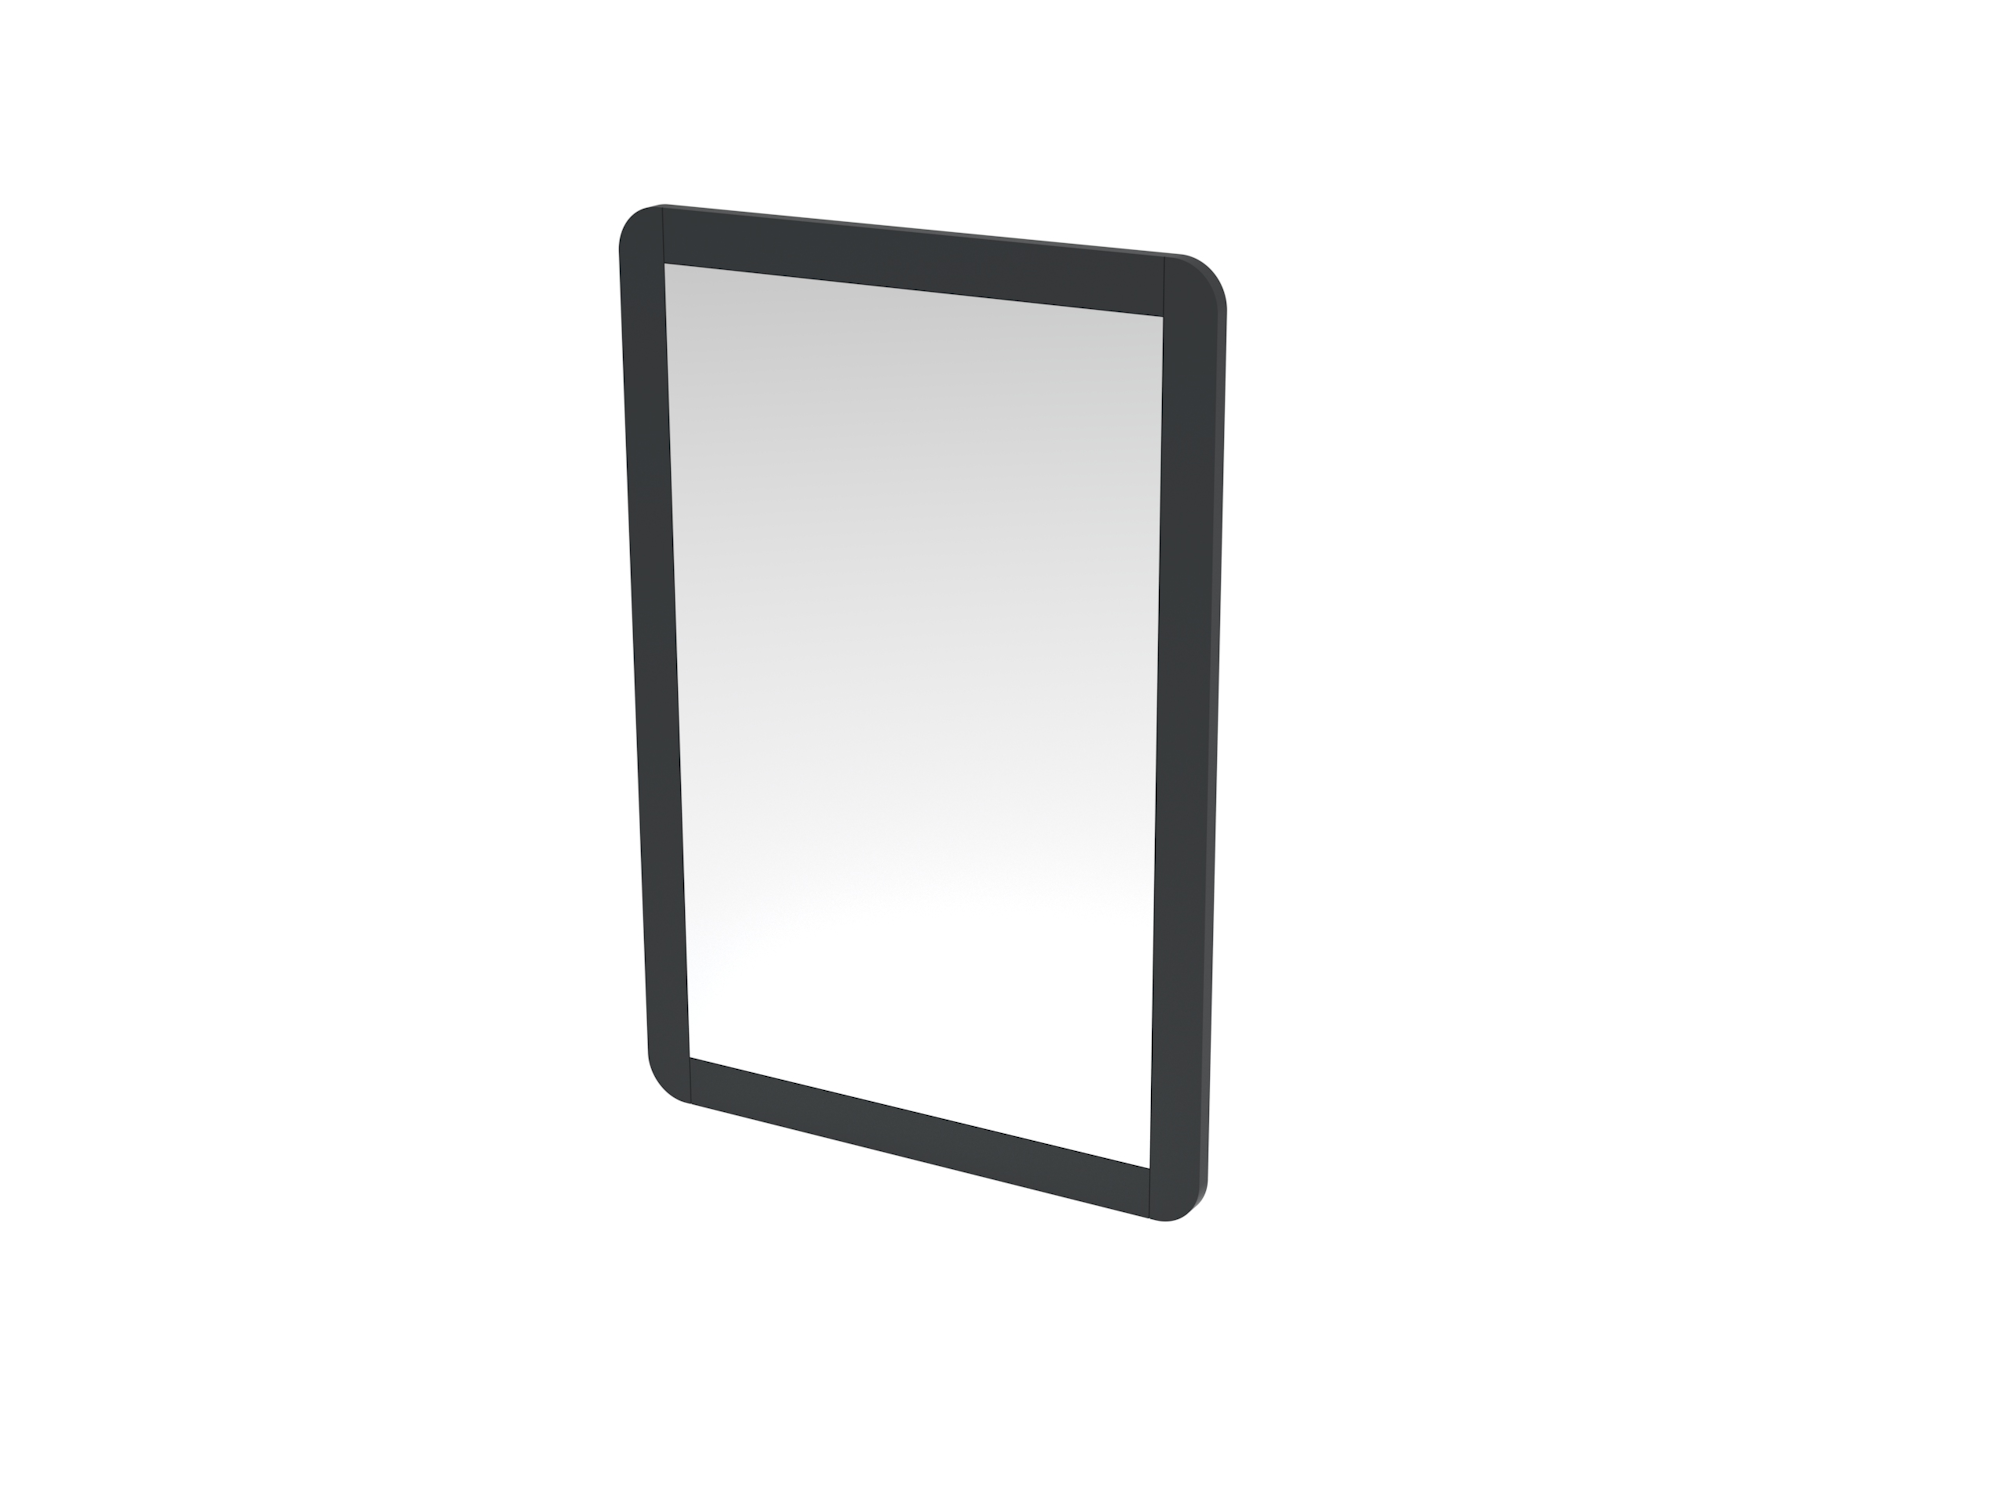 HYDE 55cm 1 door recessed electric mirror cabinet (RH) - Matte Anthracite